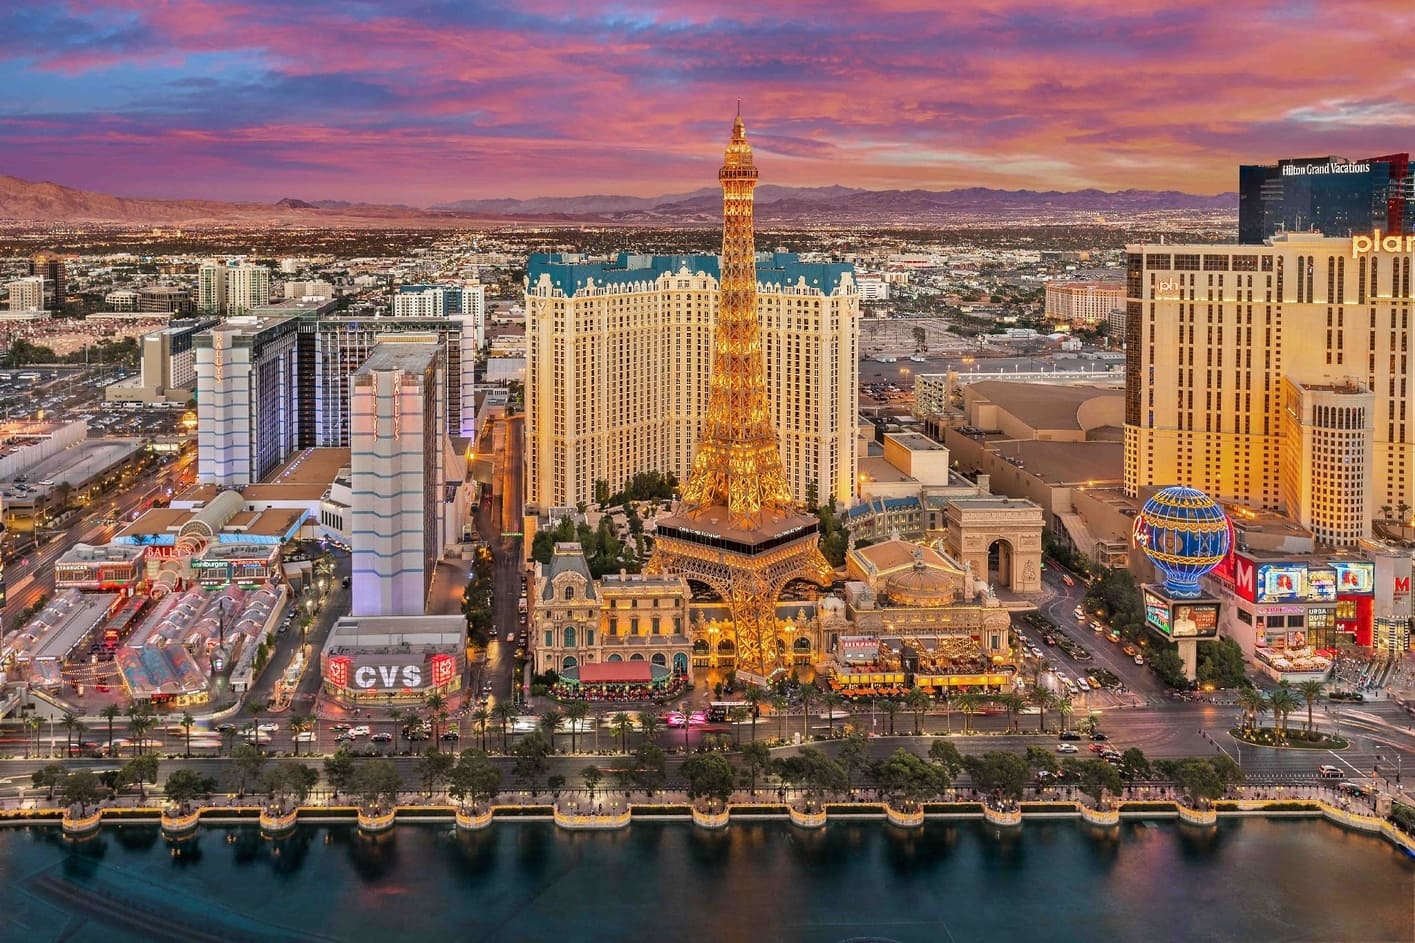 Paris Las Vegas, best hotels in las vegas for adults